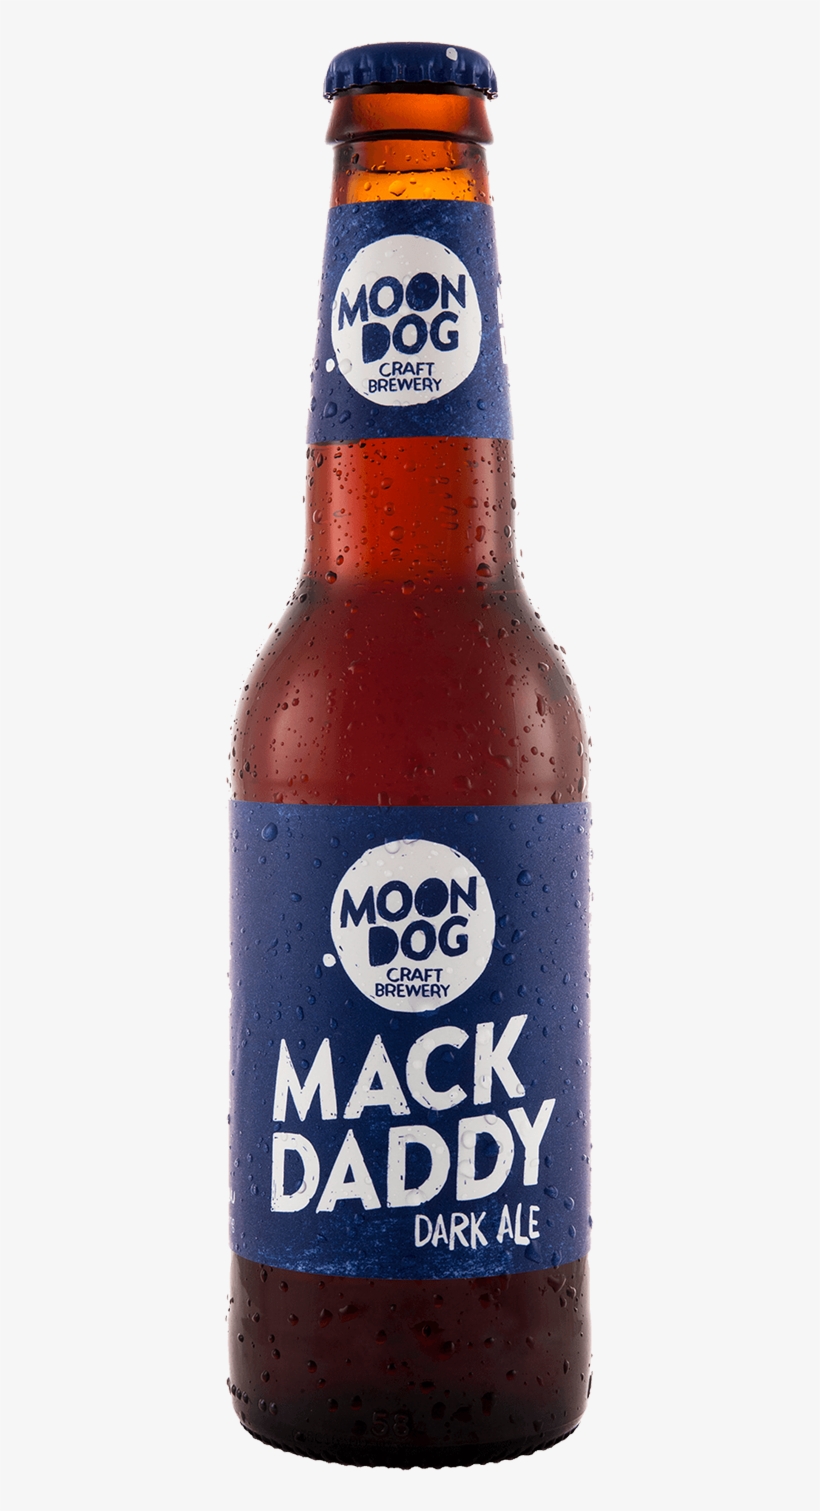 Moon Dog Mack Daddy Dark Ale 330ml - Beer, transparent png #2958371